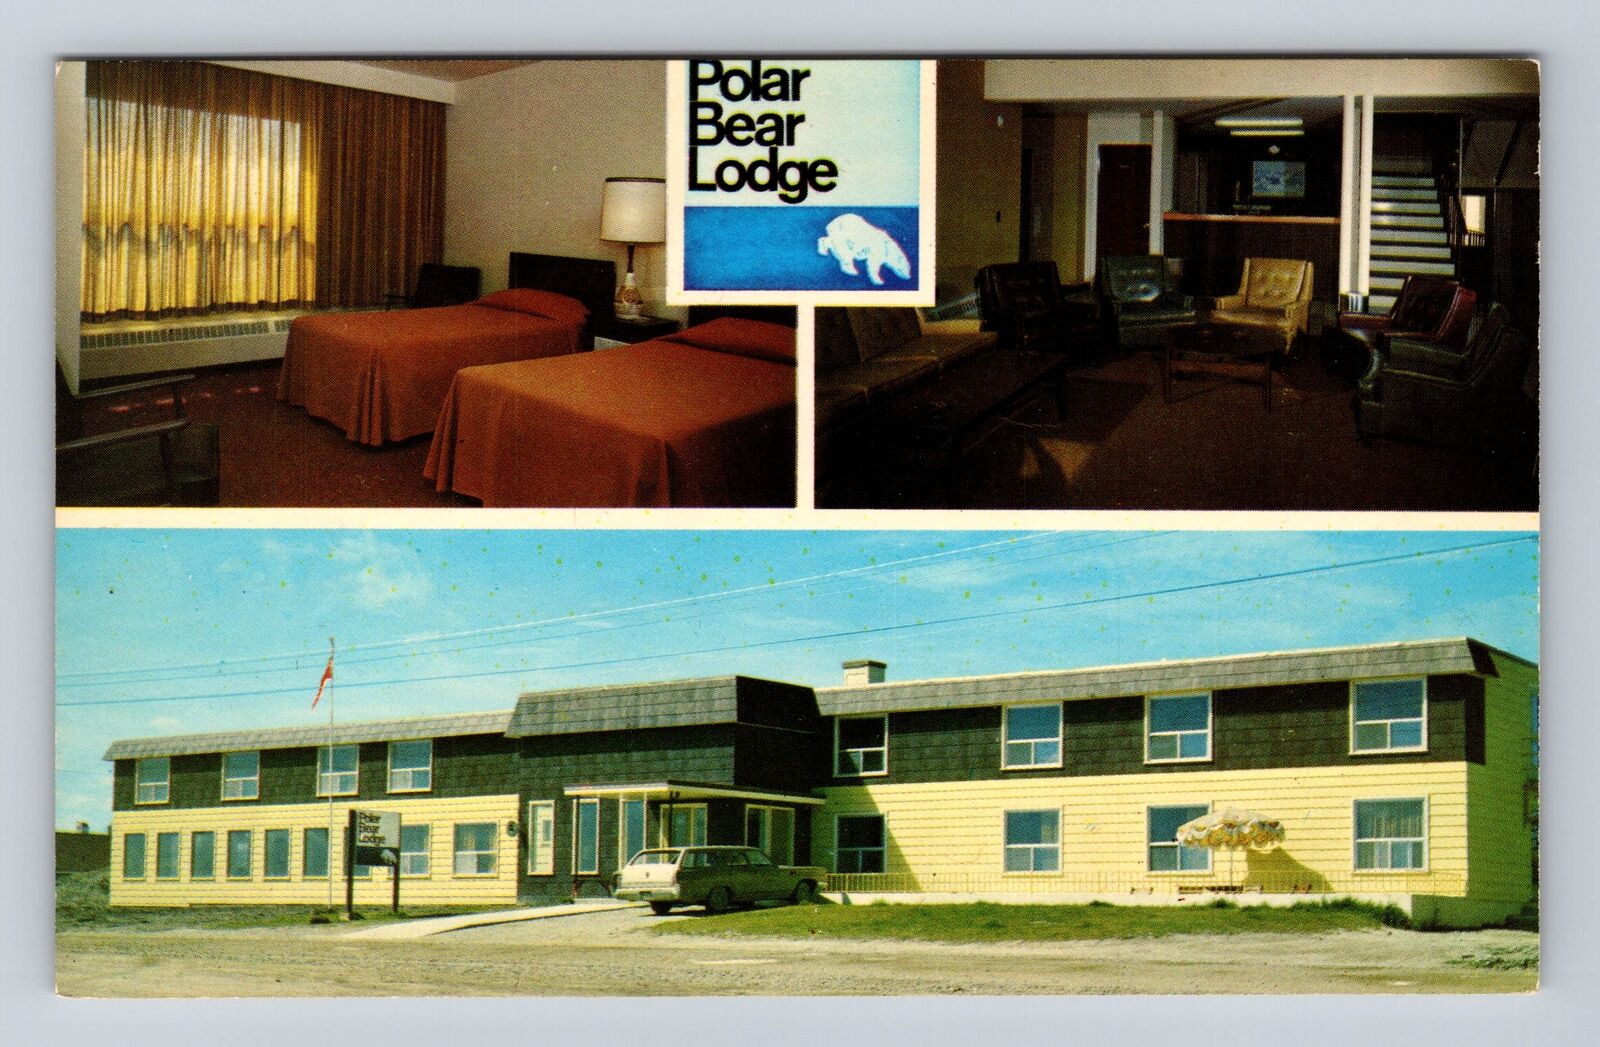 Moosonee Ontario Canada, Polar Bear Lodge Room View Advertising Vintage Postcard